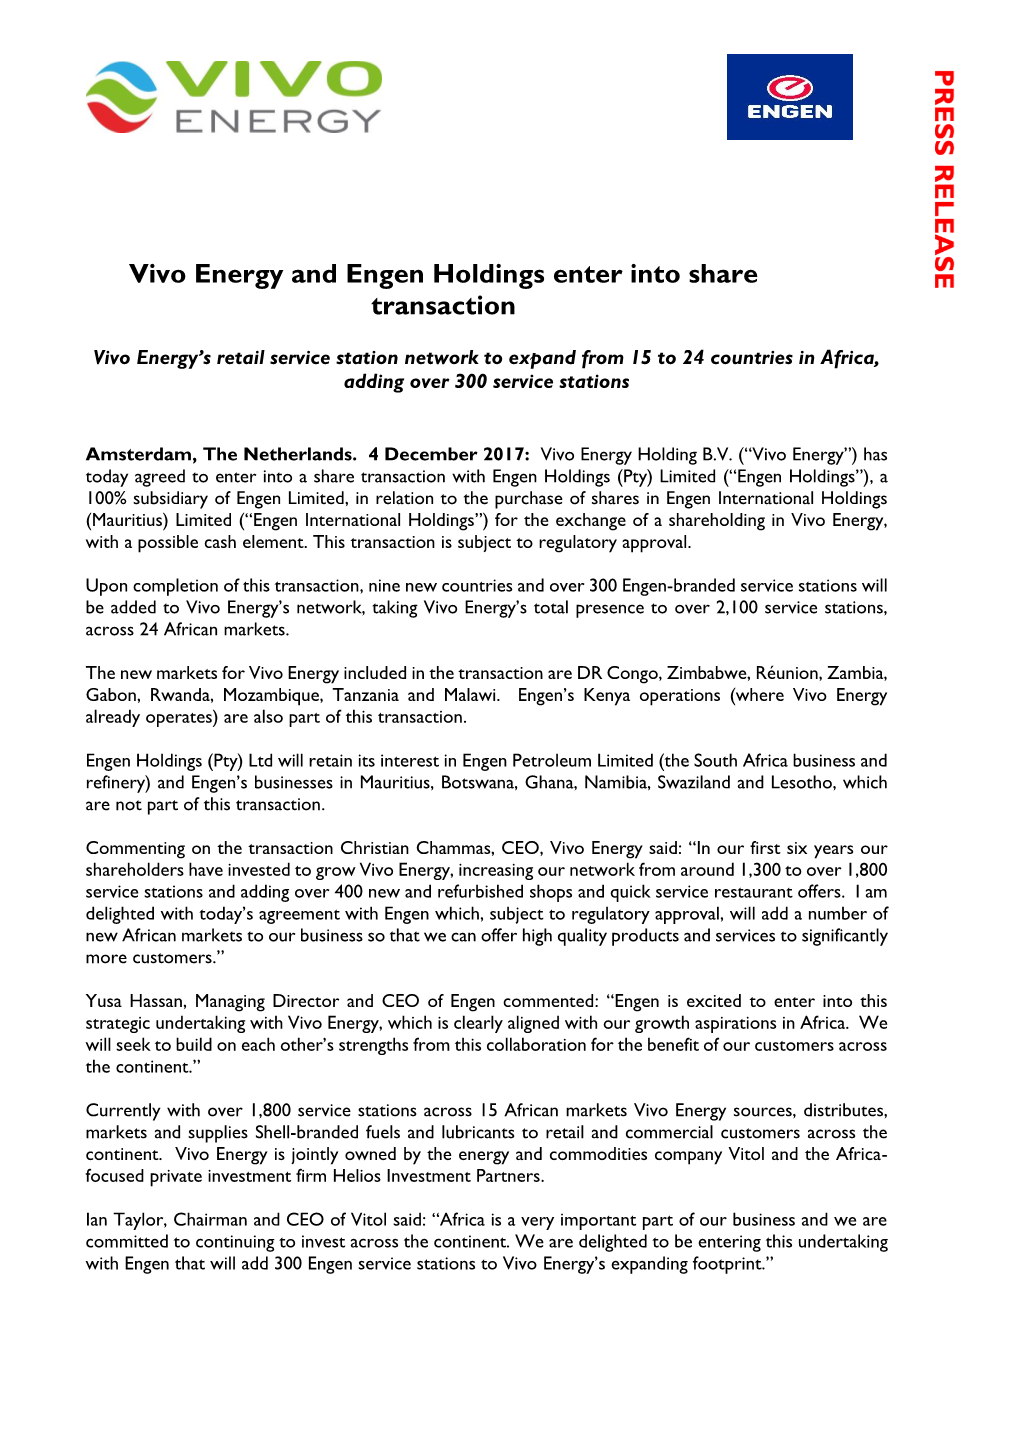 Vivo Energy and Engen Holdings Enter Into Share Transaction